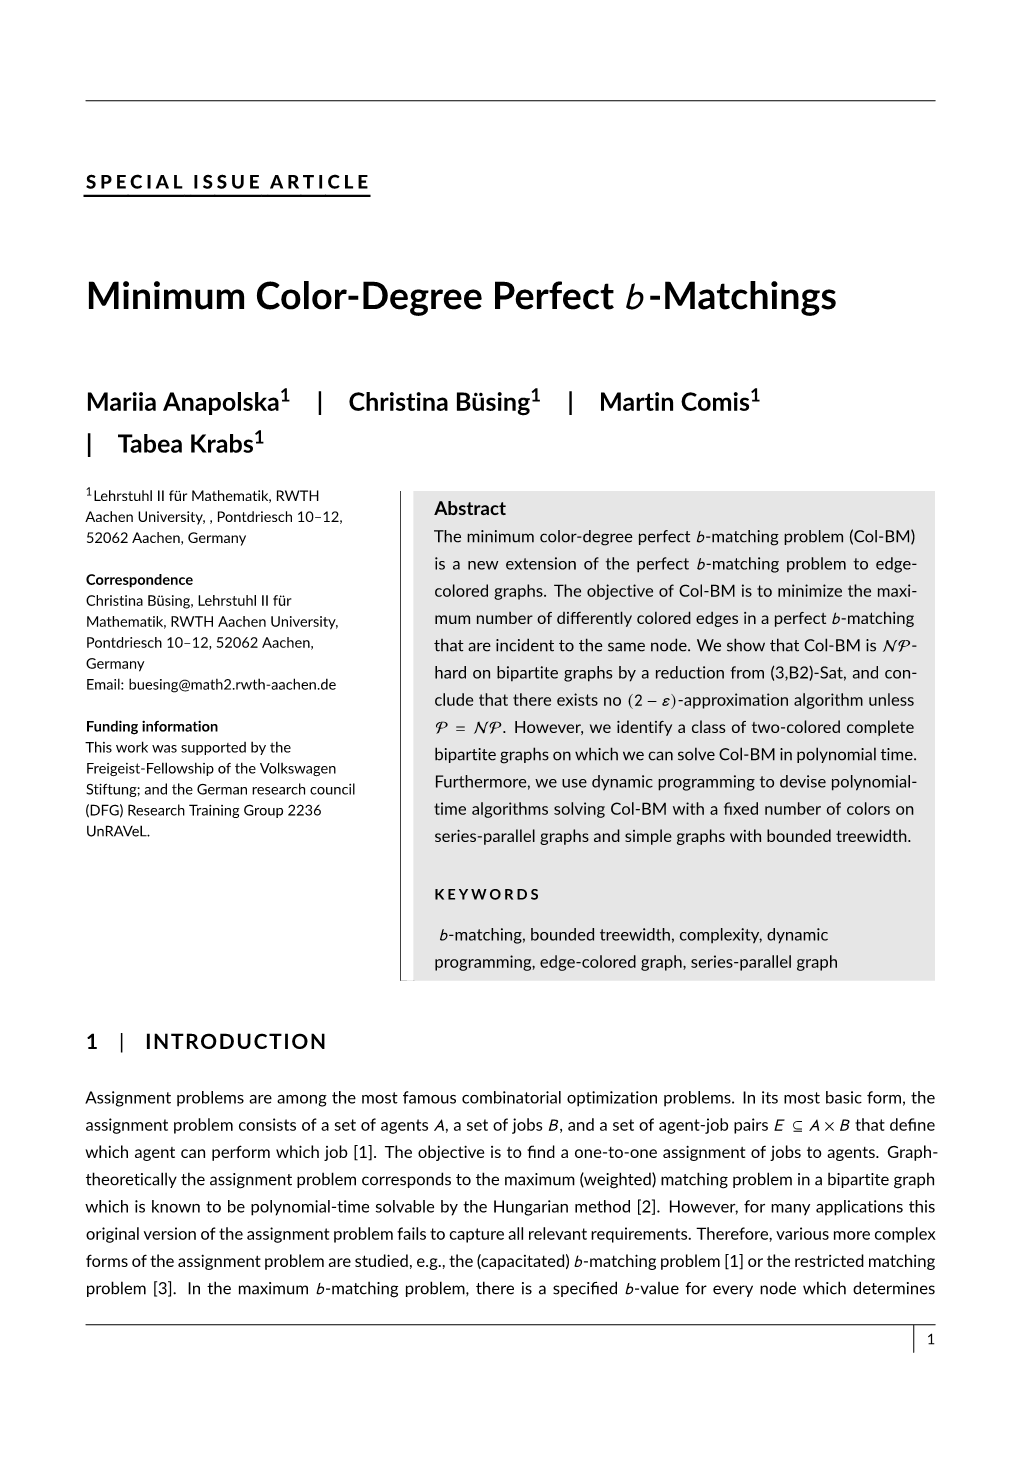 Minimum Color-Degree Perfect B-Matchings